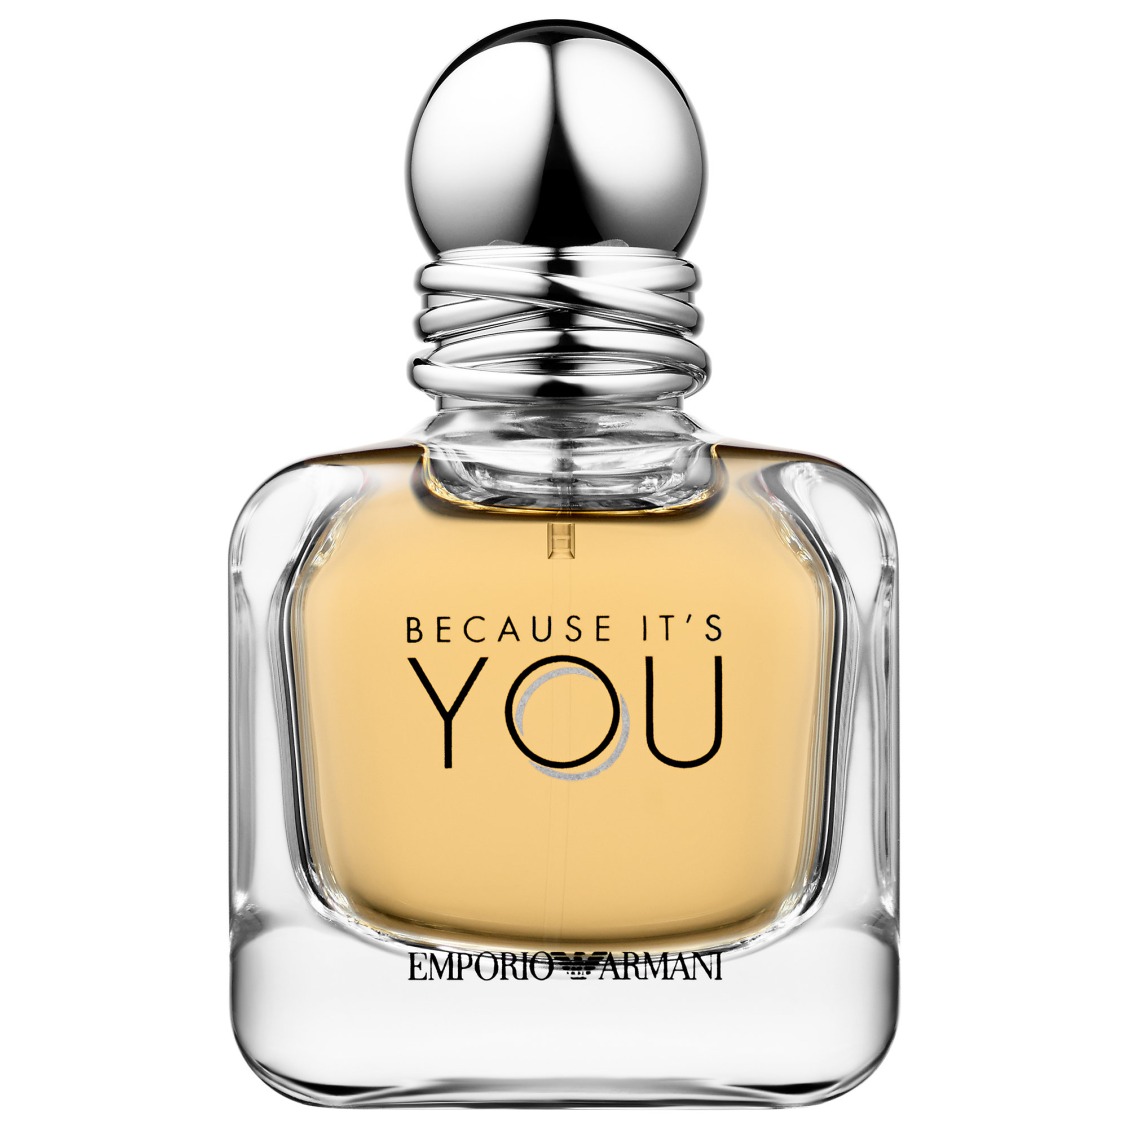 because it's you armani perfume